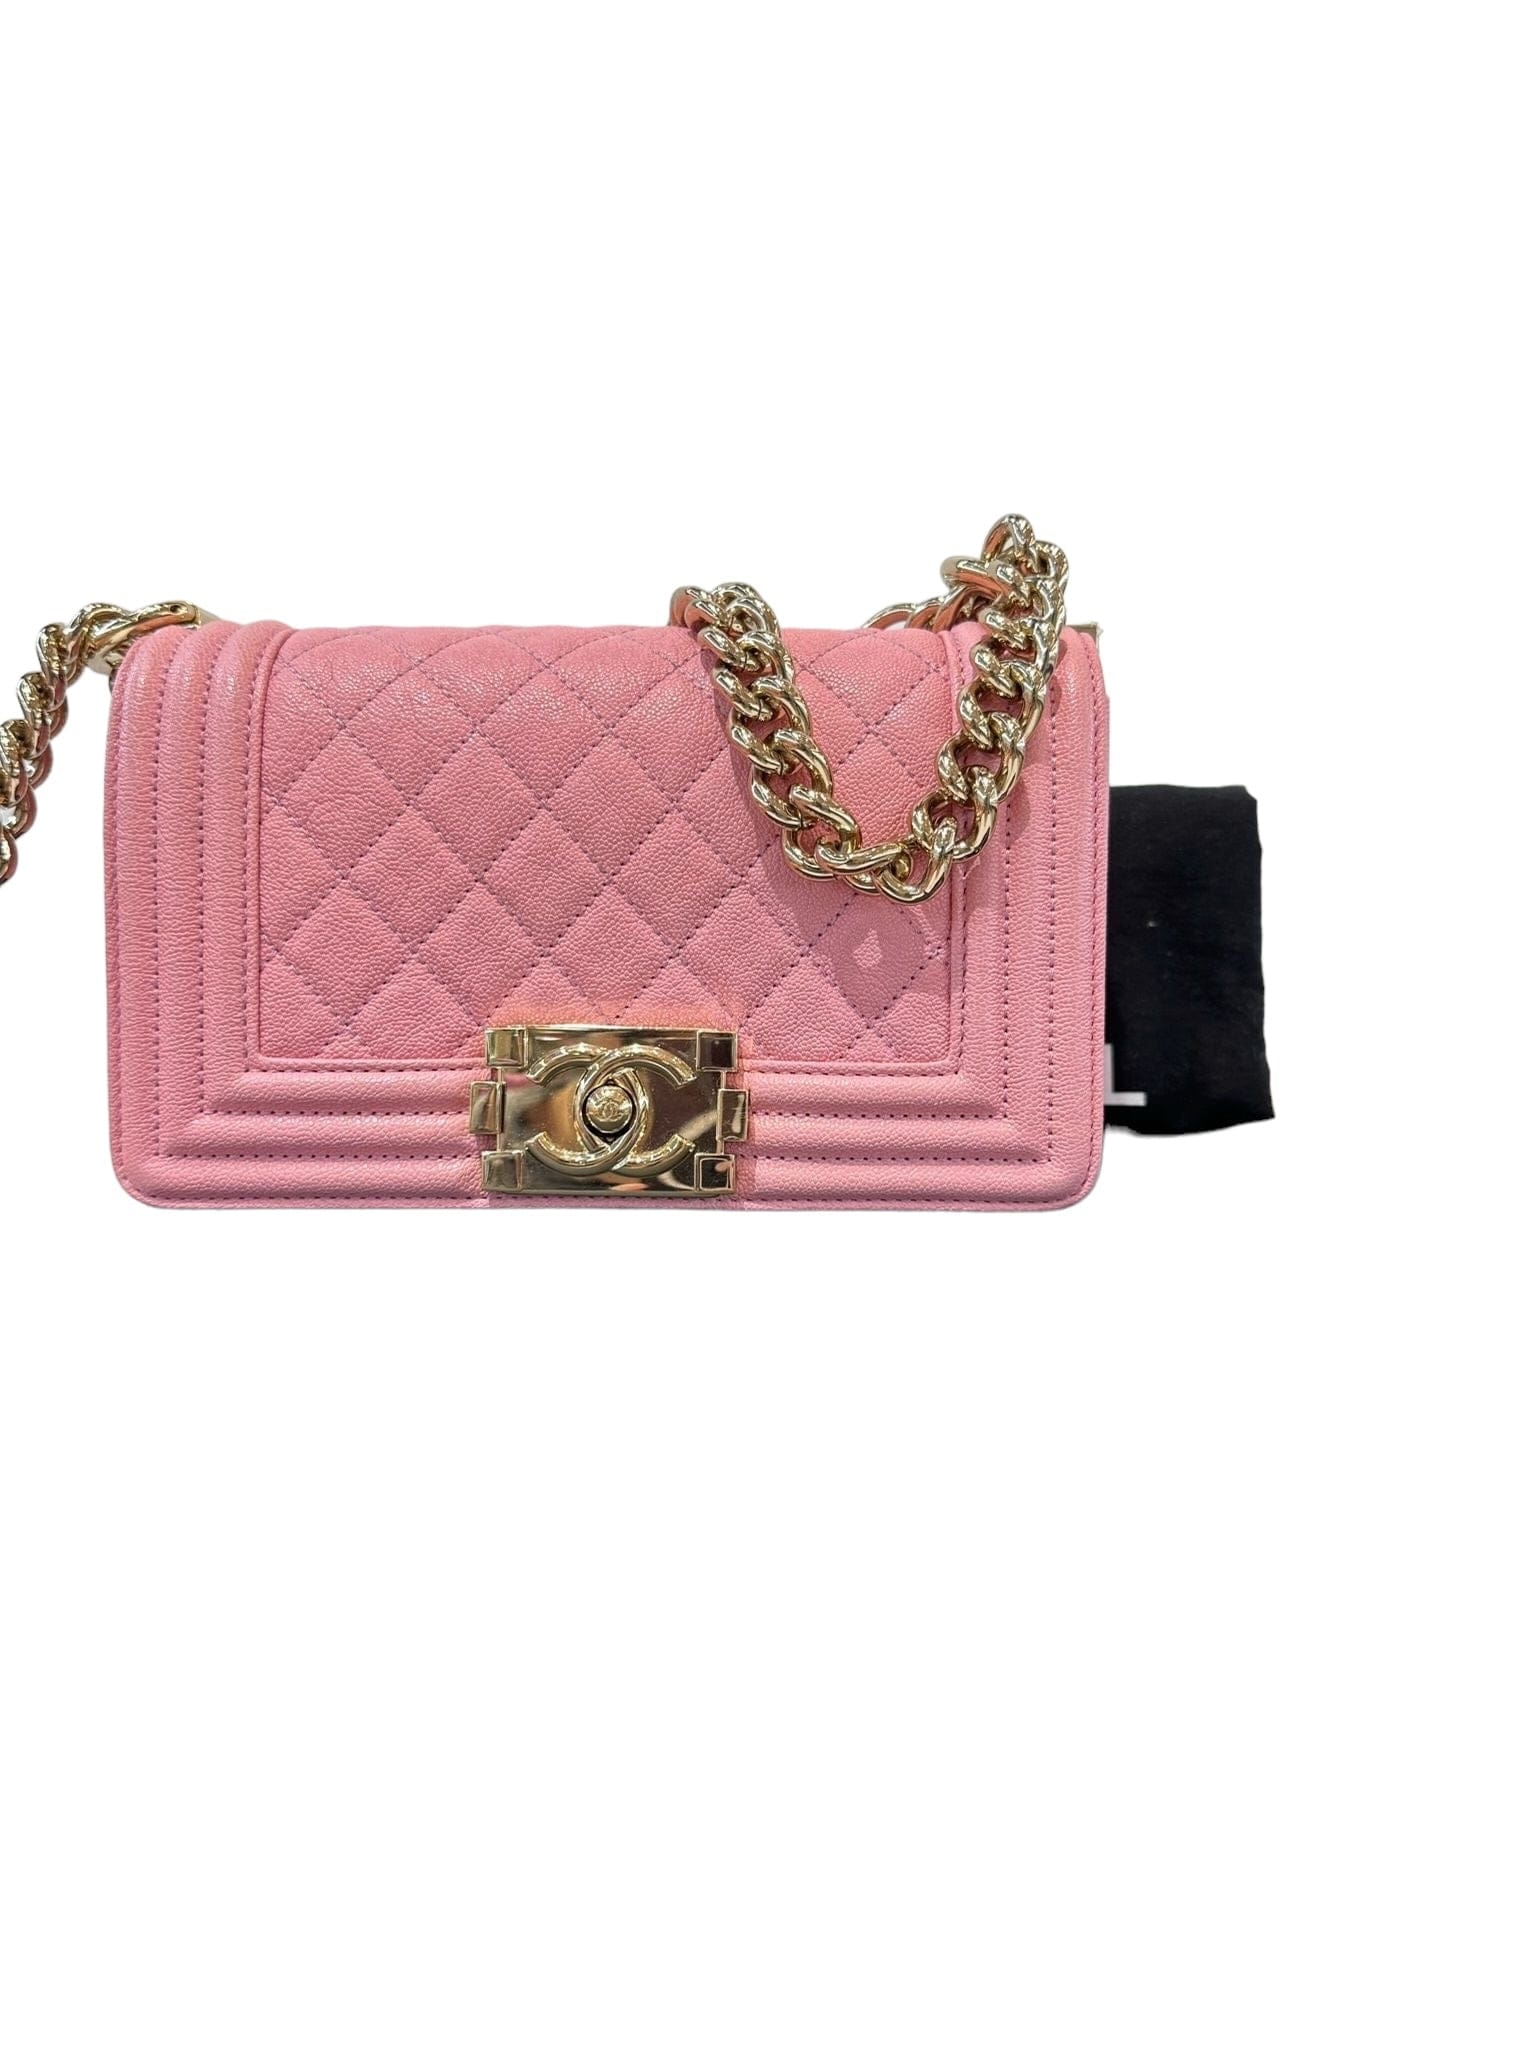 Chanel Chanel Small Pink Boy Bag